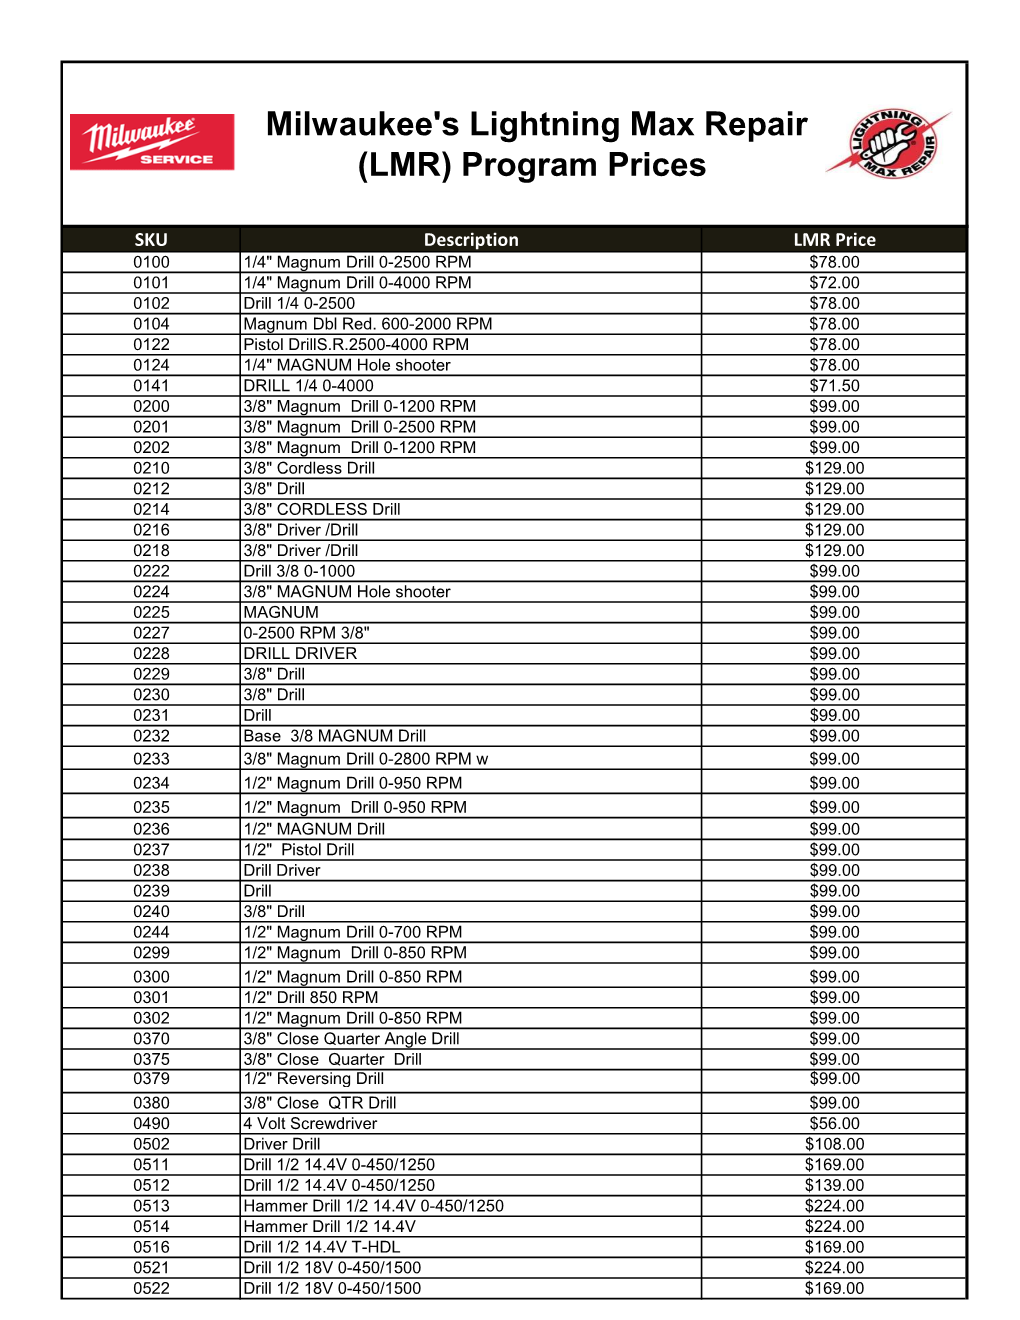 LMR Price List 8.1.2019.Xlsx